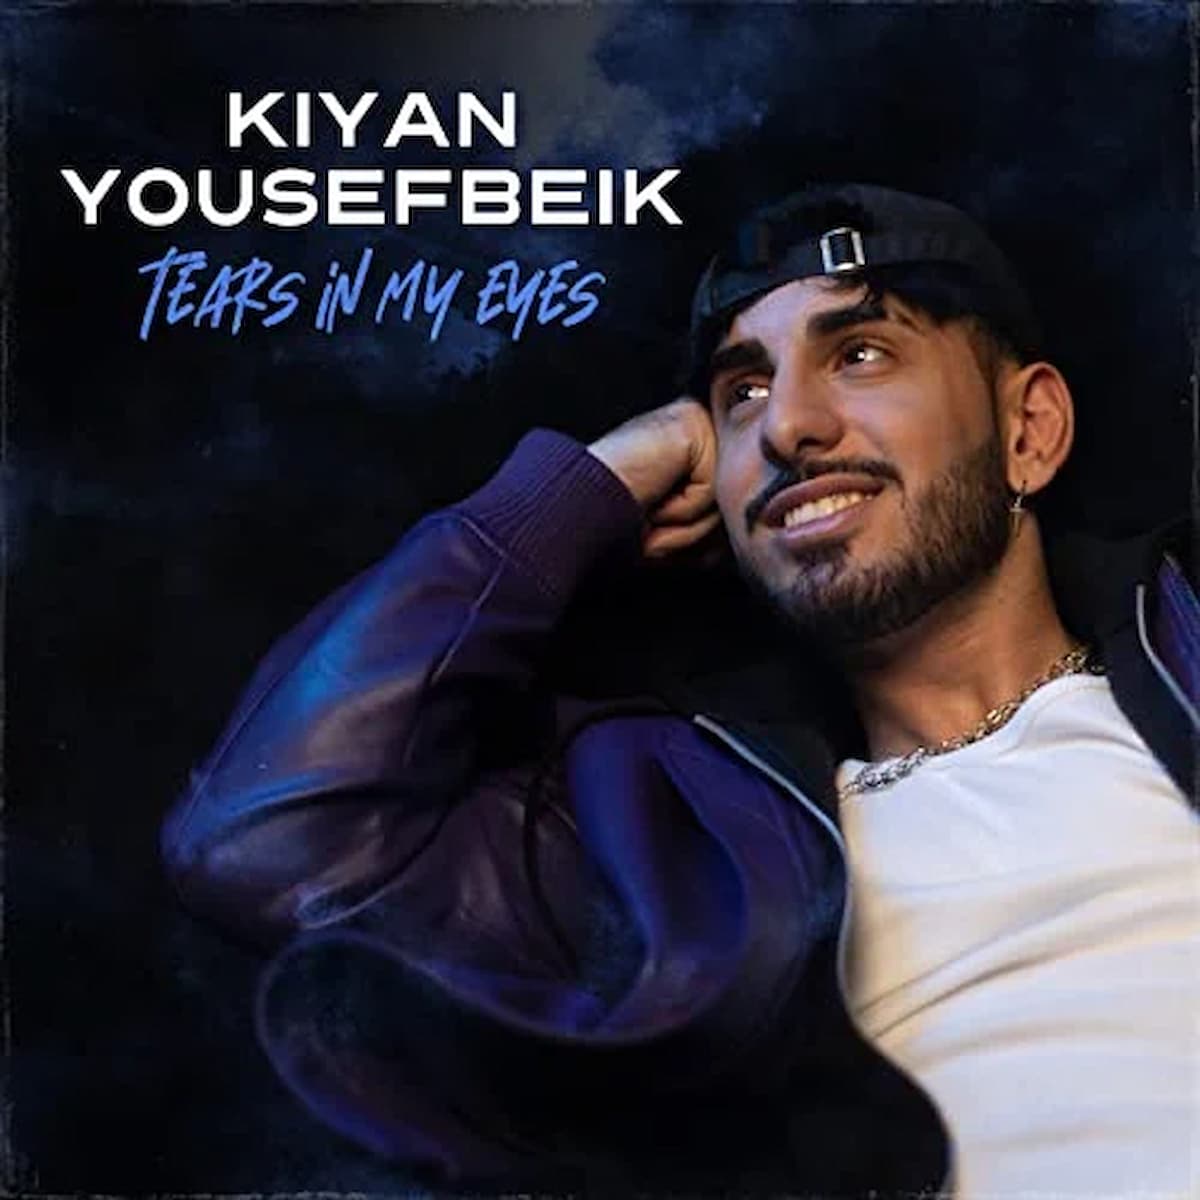 Kiyan Yousefbeik - Tears In My Eyes - DSDS 2023 Sieger-Song, Final-Song - hier im Bild das Single-Cover mit Kiyan Yousefbeik lachend in Großaufnahme